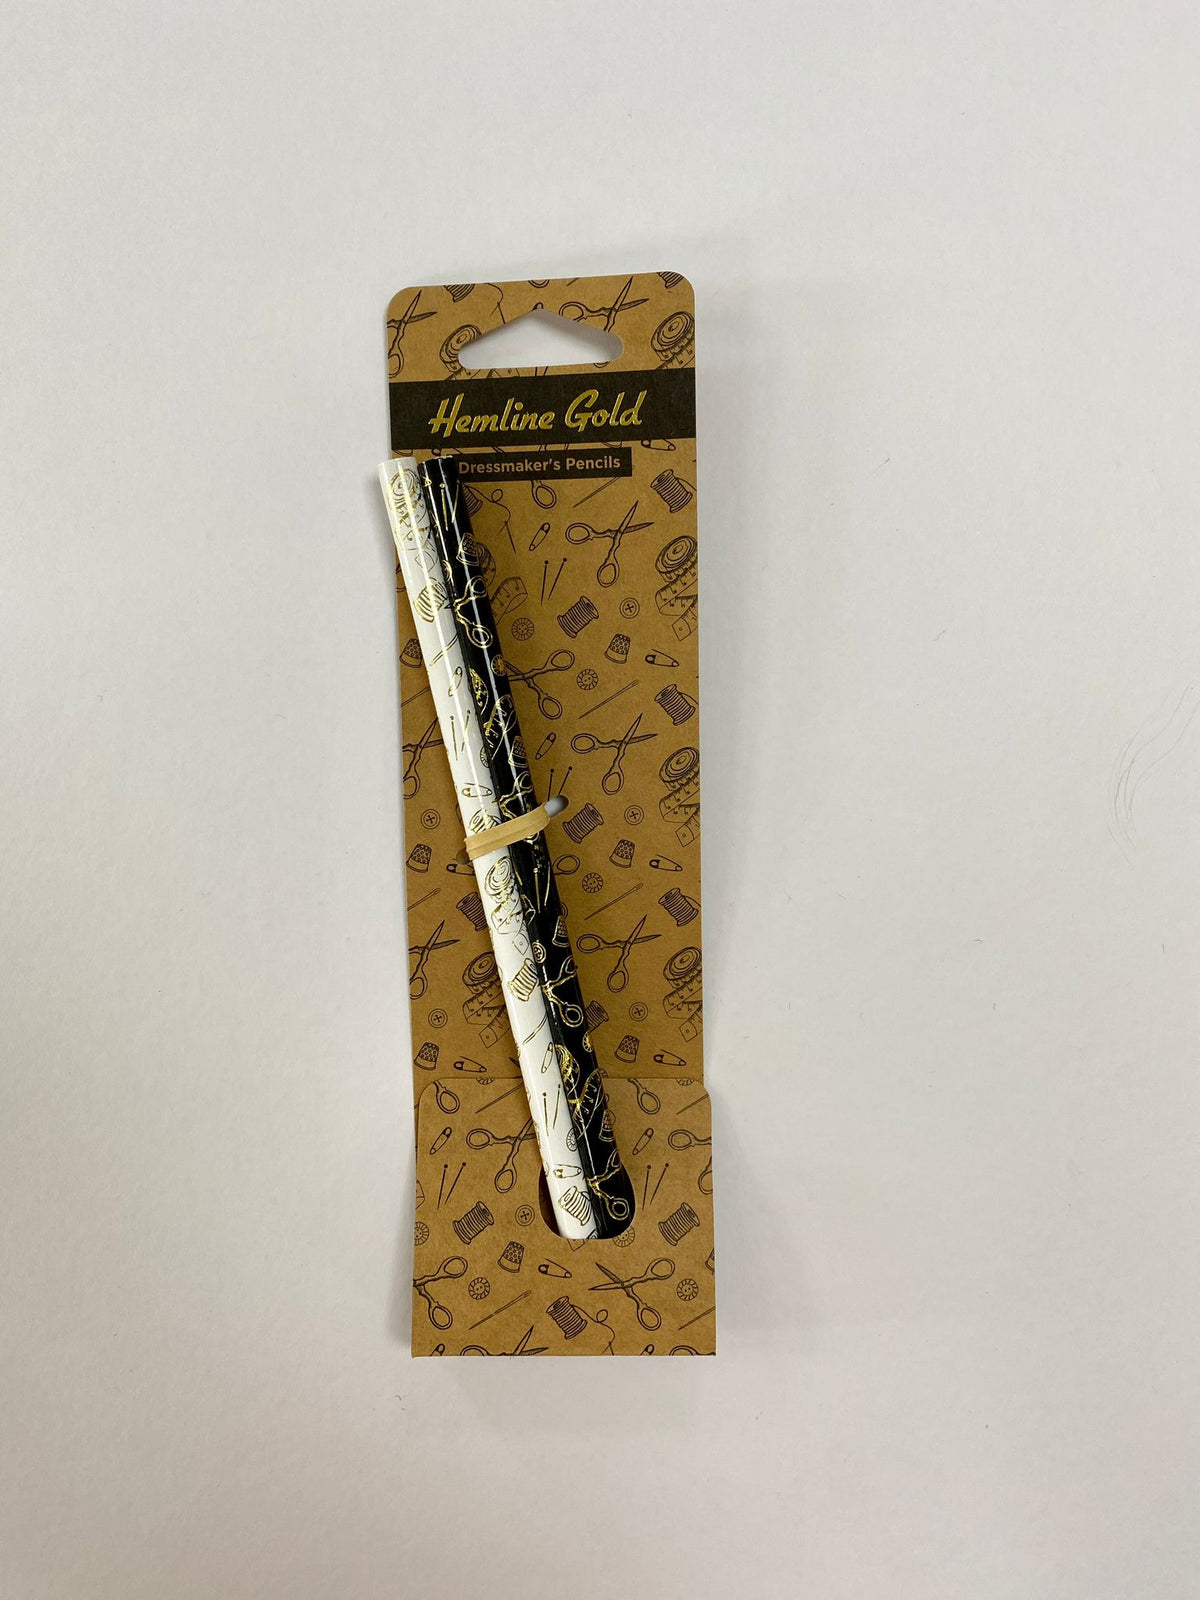 Hemline Gold Dressmaker's Pencils